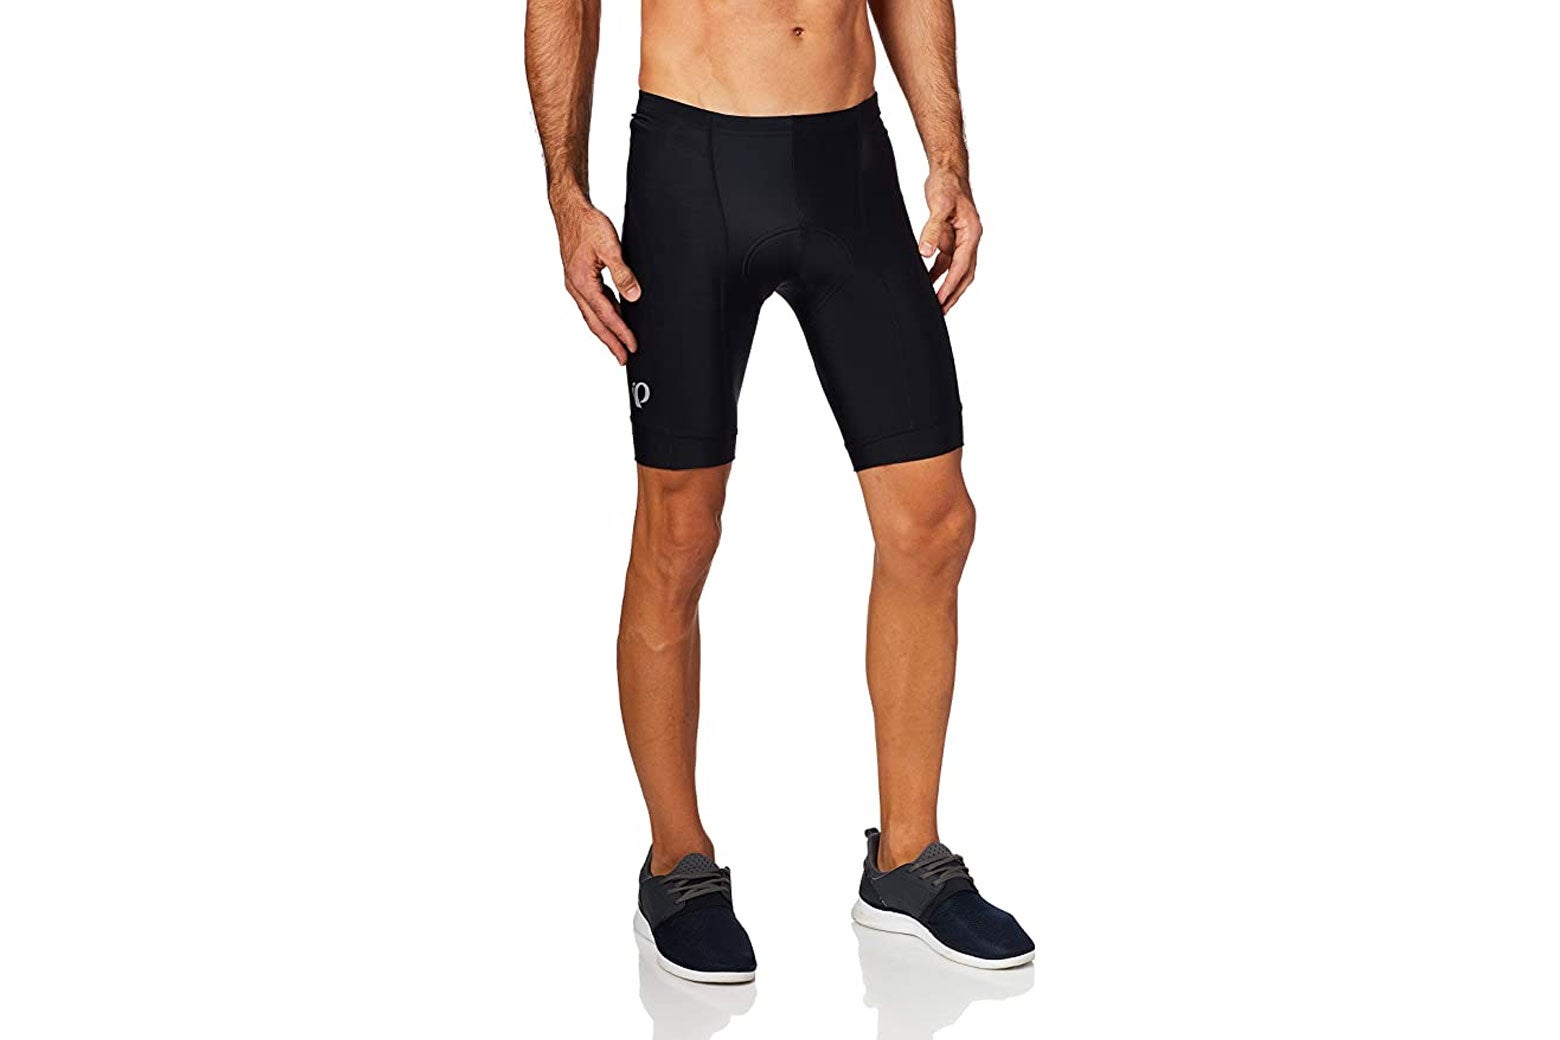 A model wearing black bike shorts.